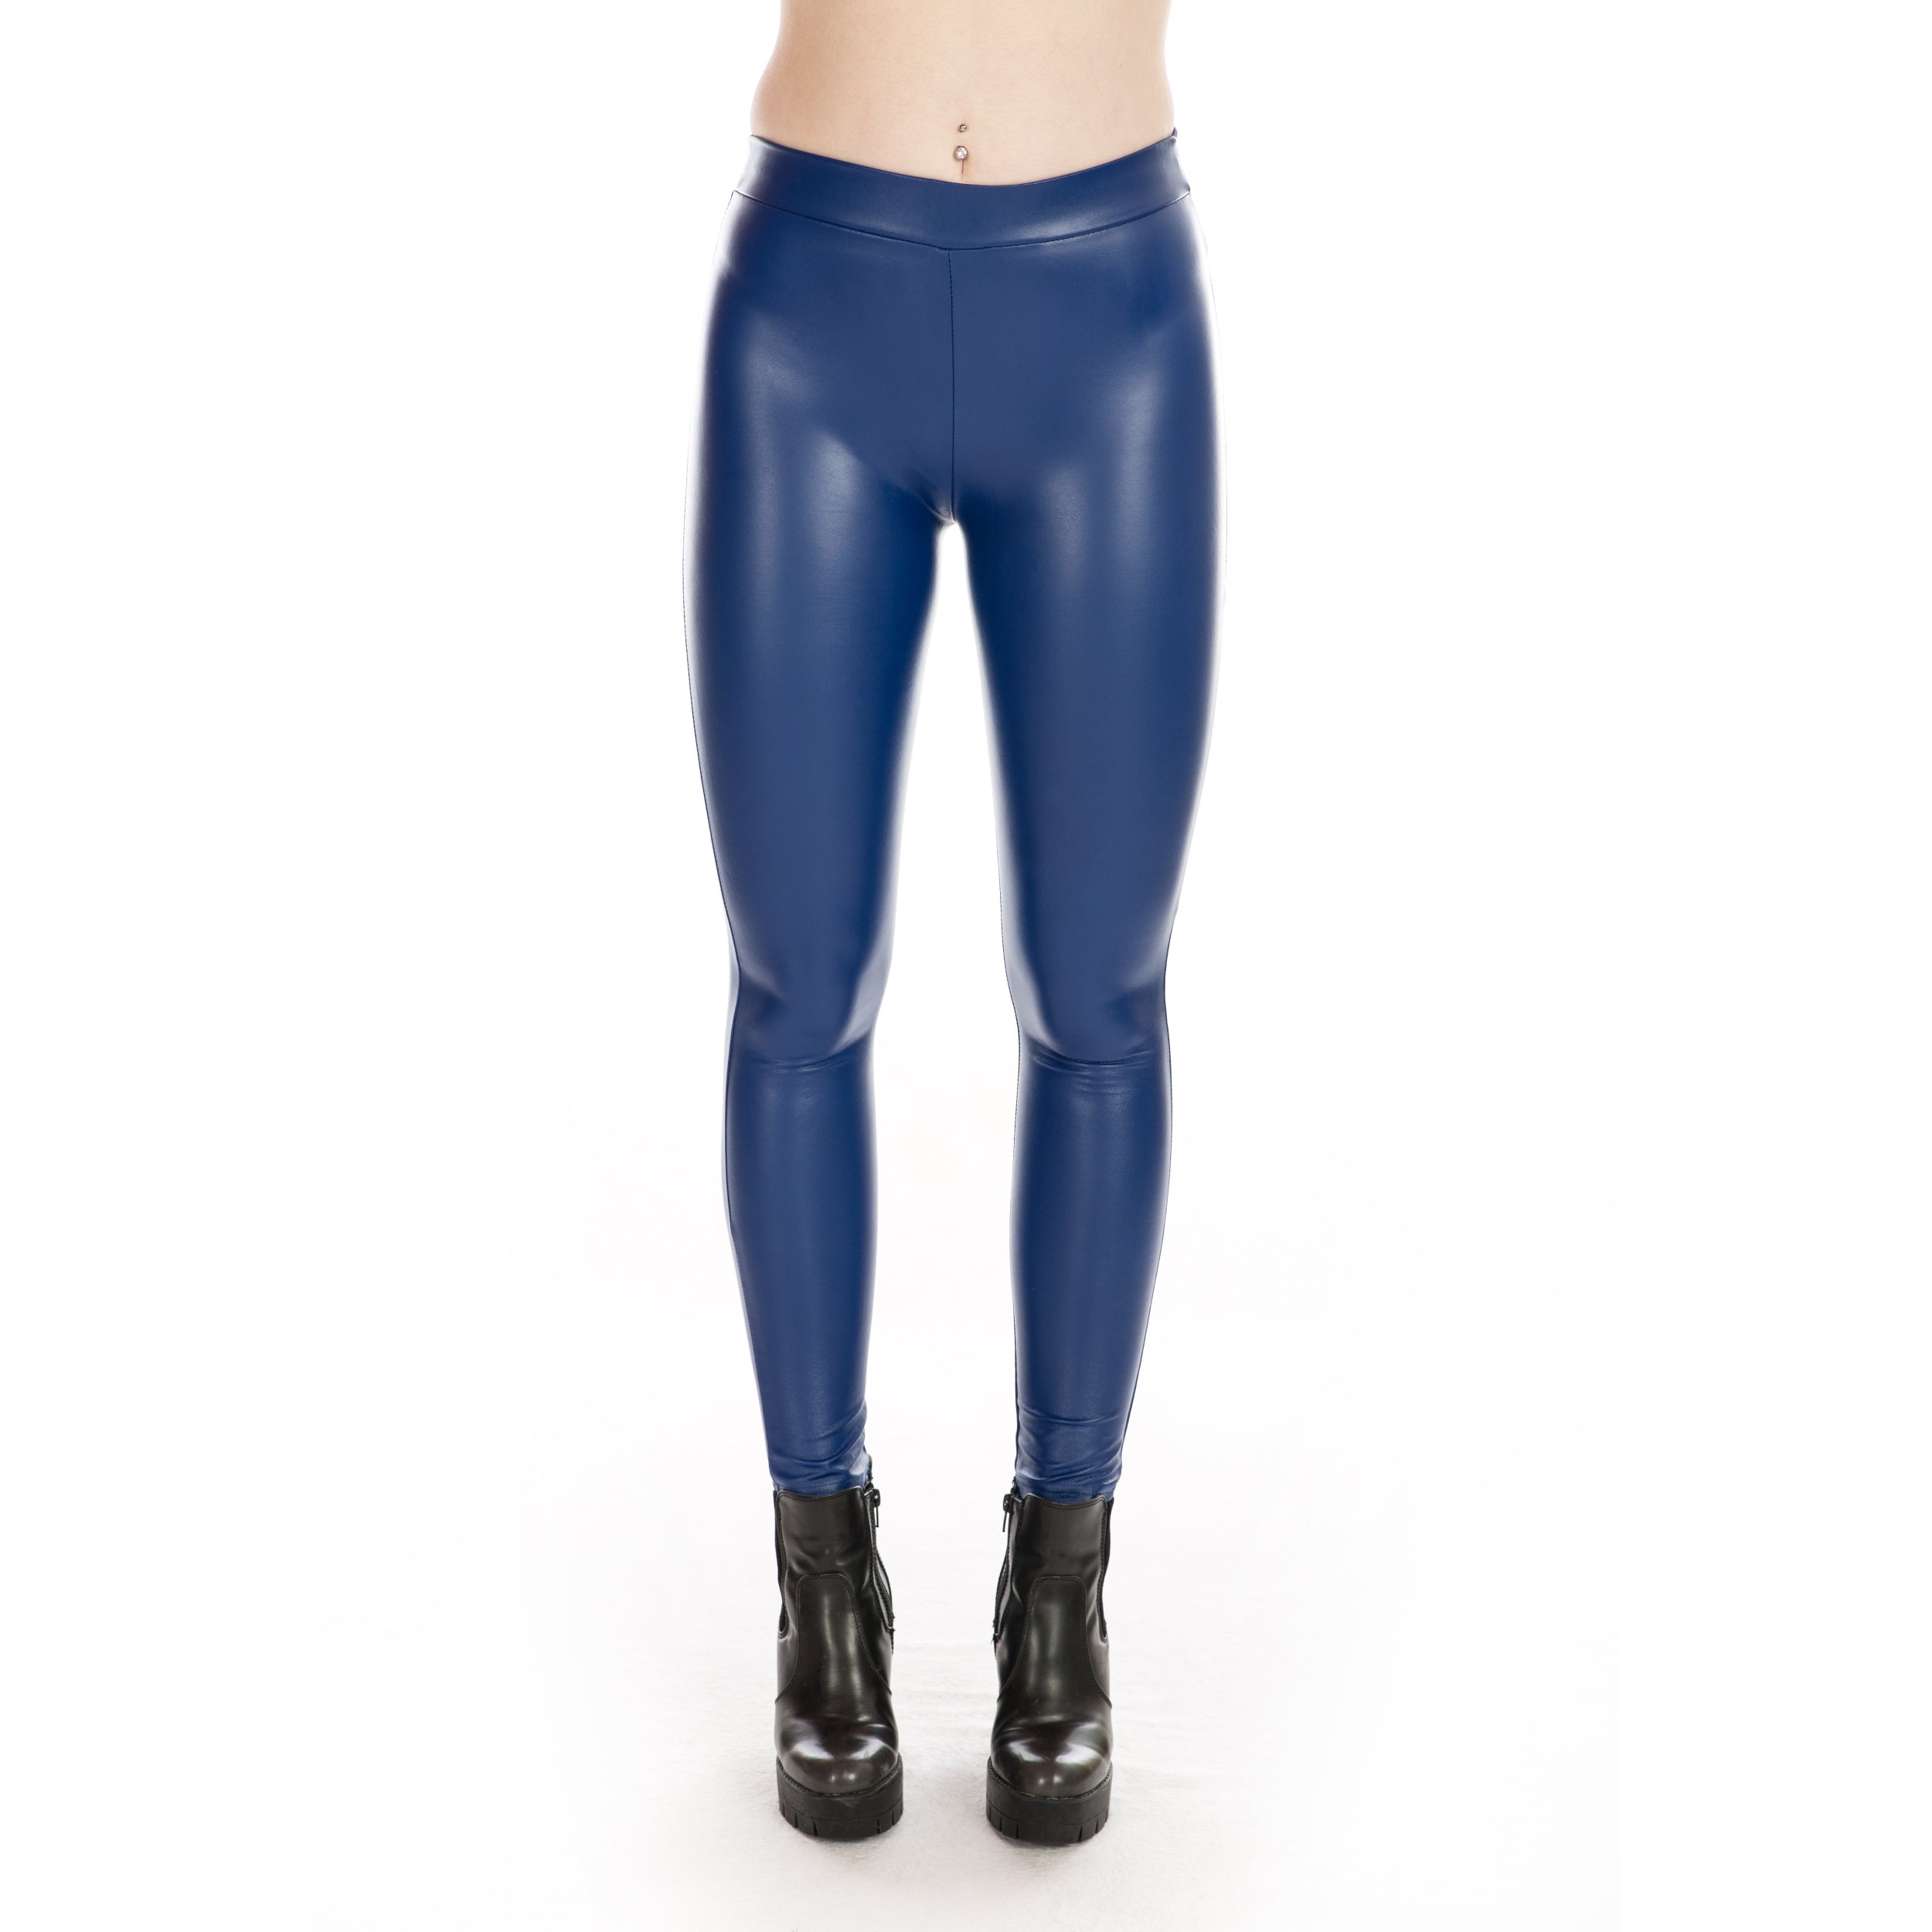 Rubberfashion Kunstleder Leggings Damen - Sexy Low waist Lederoptik - Leder Optik Hose Leggins für Damen - Frauen